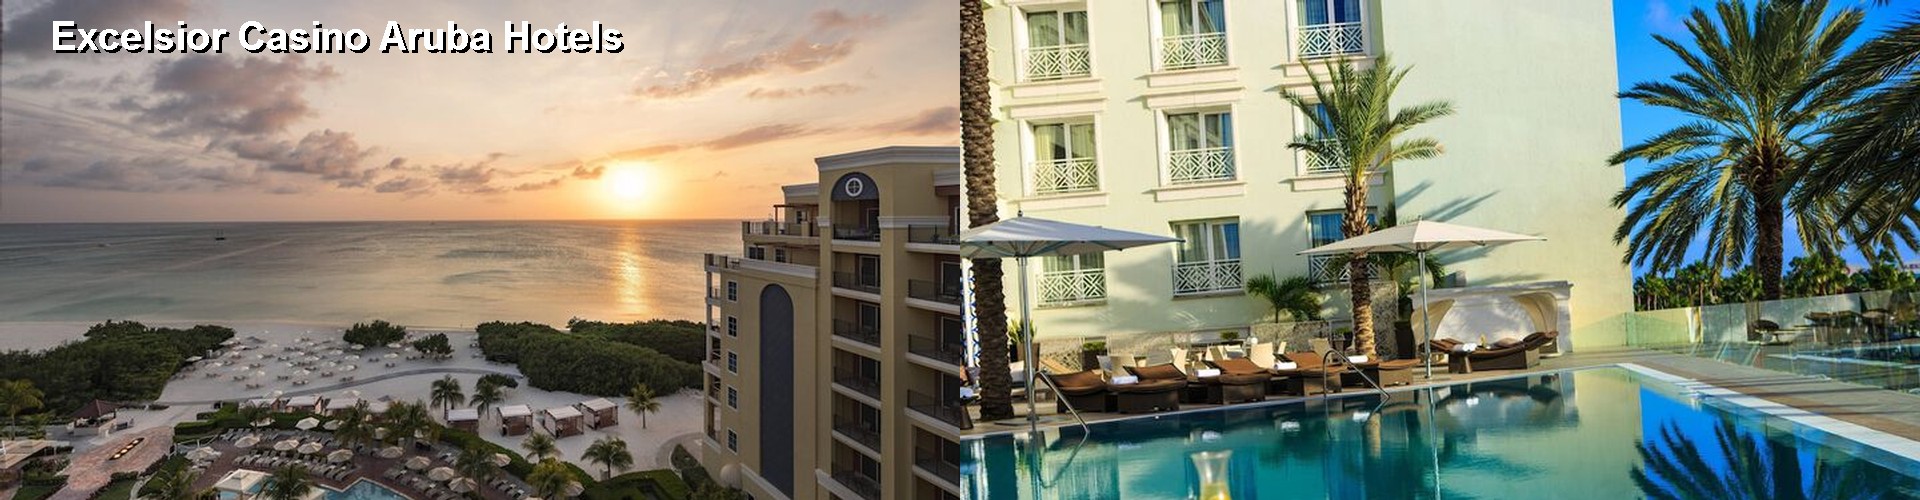 5 Best Hotels near Excelsior Casino Aruba